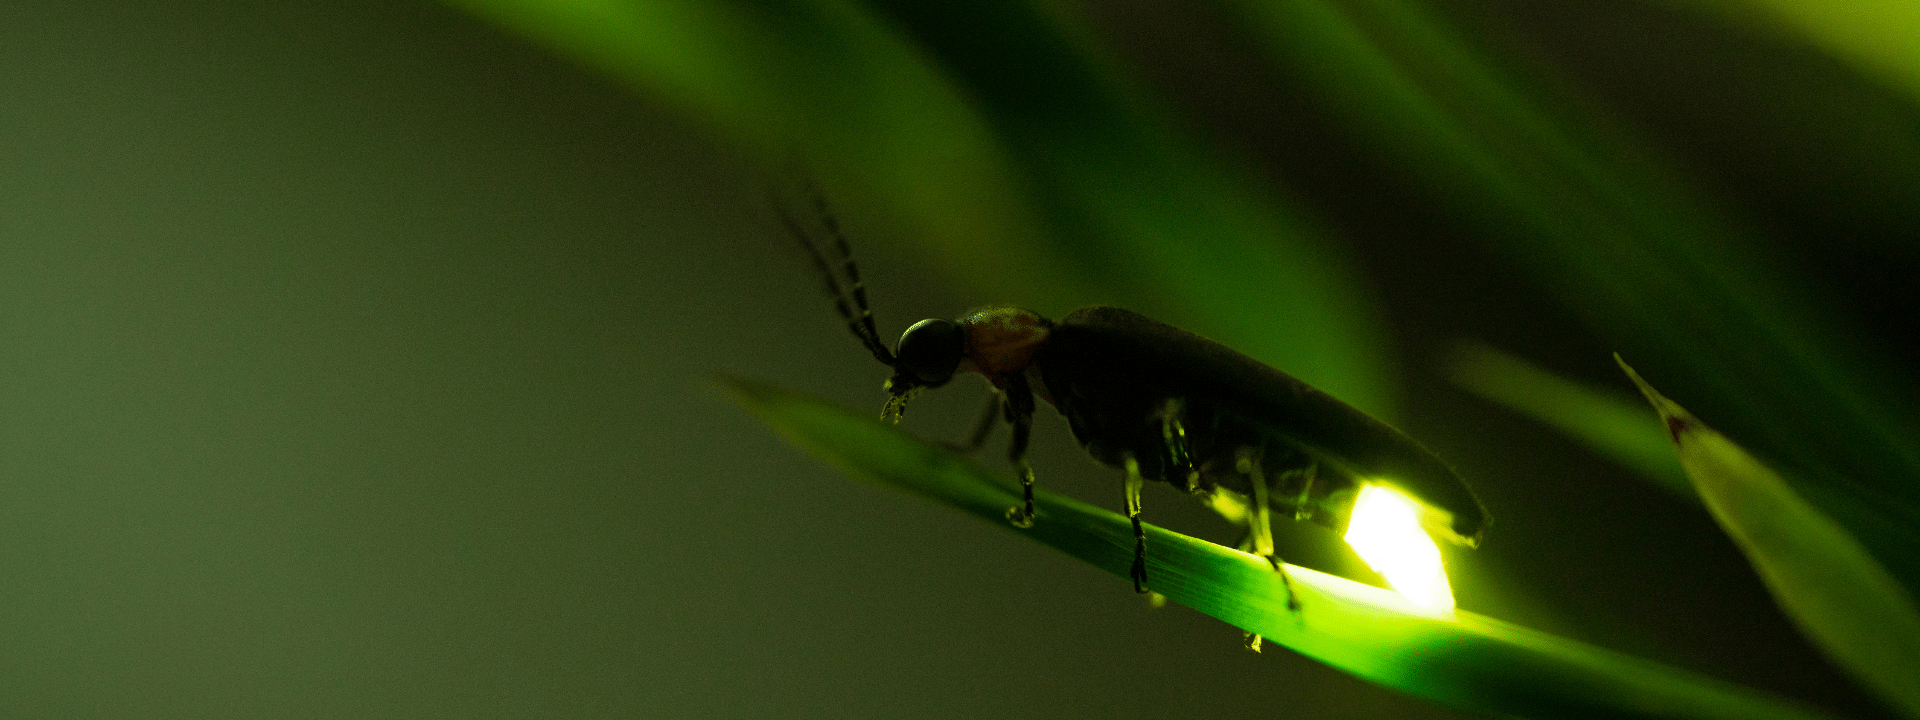 firefly biomimicry